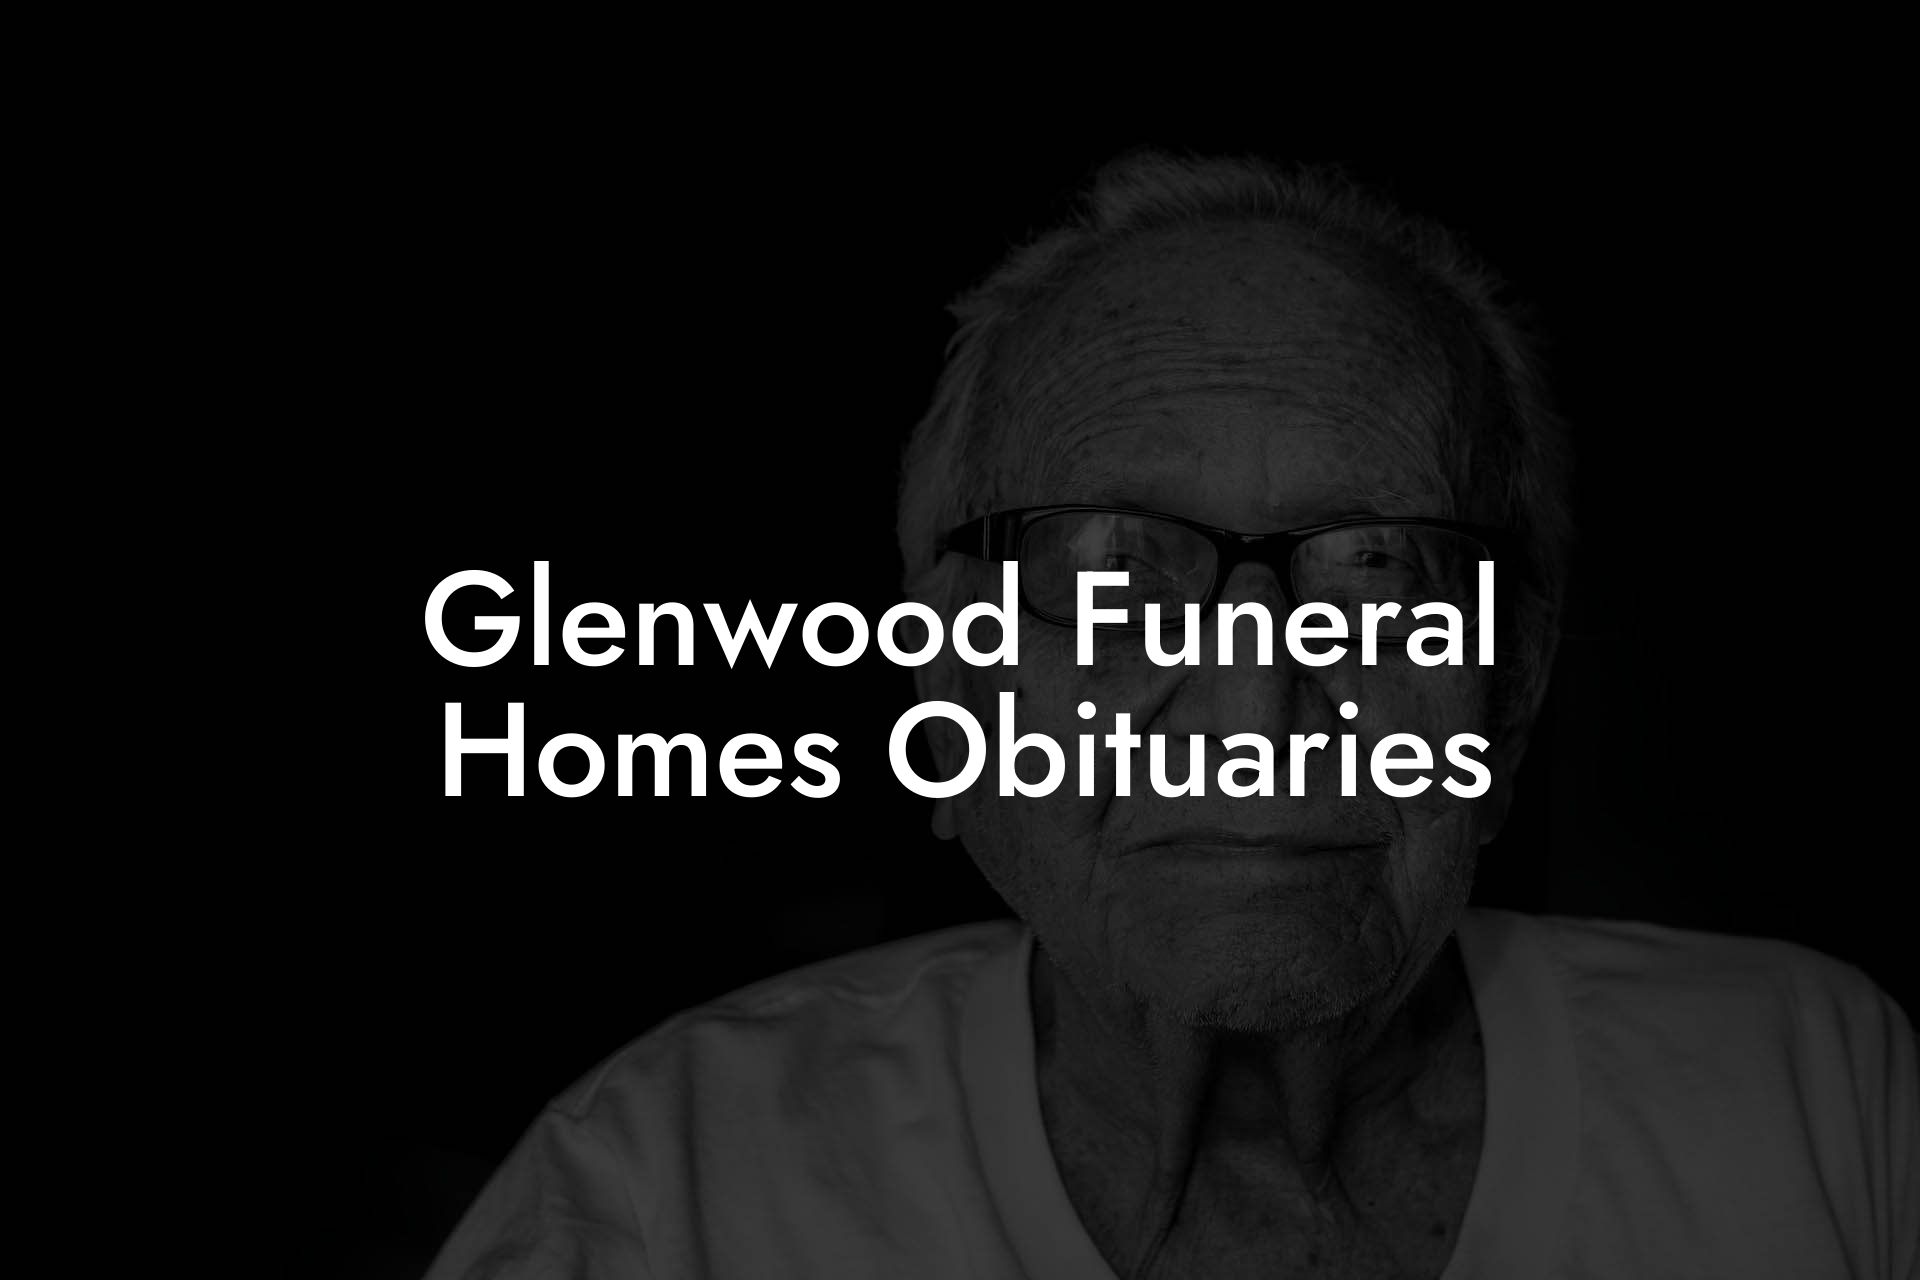 Glenwood Funeral Homes Obituaries